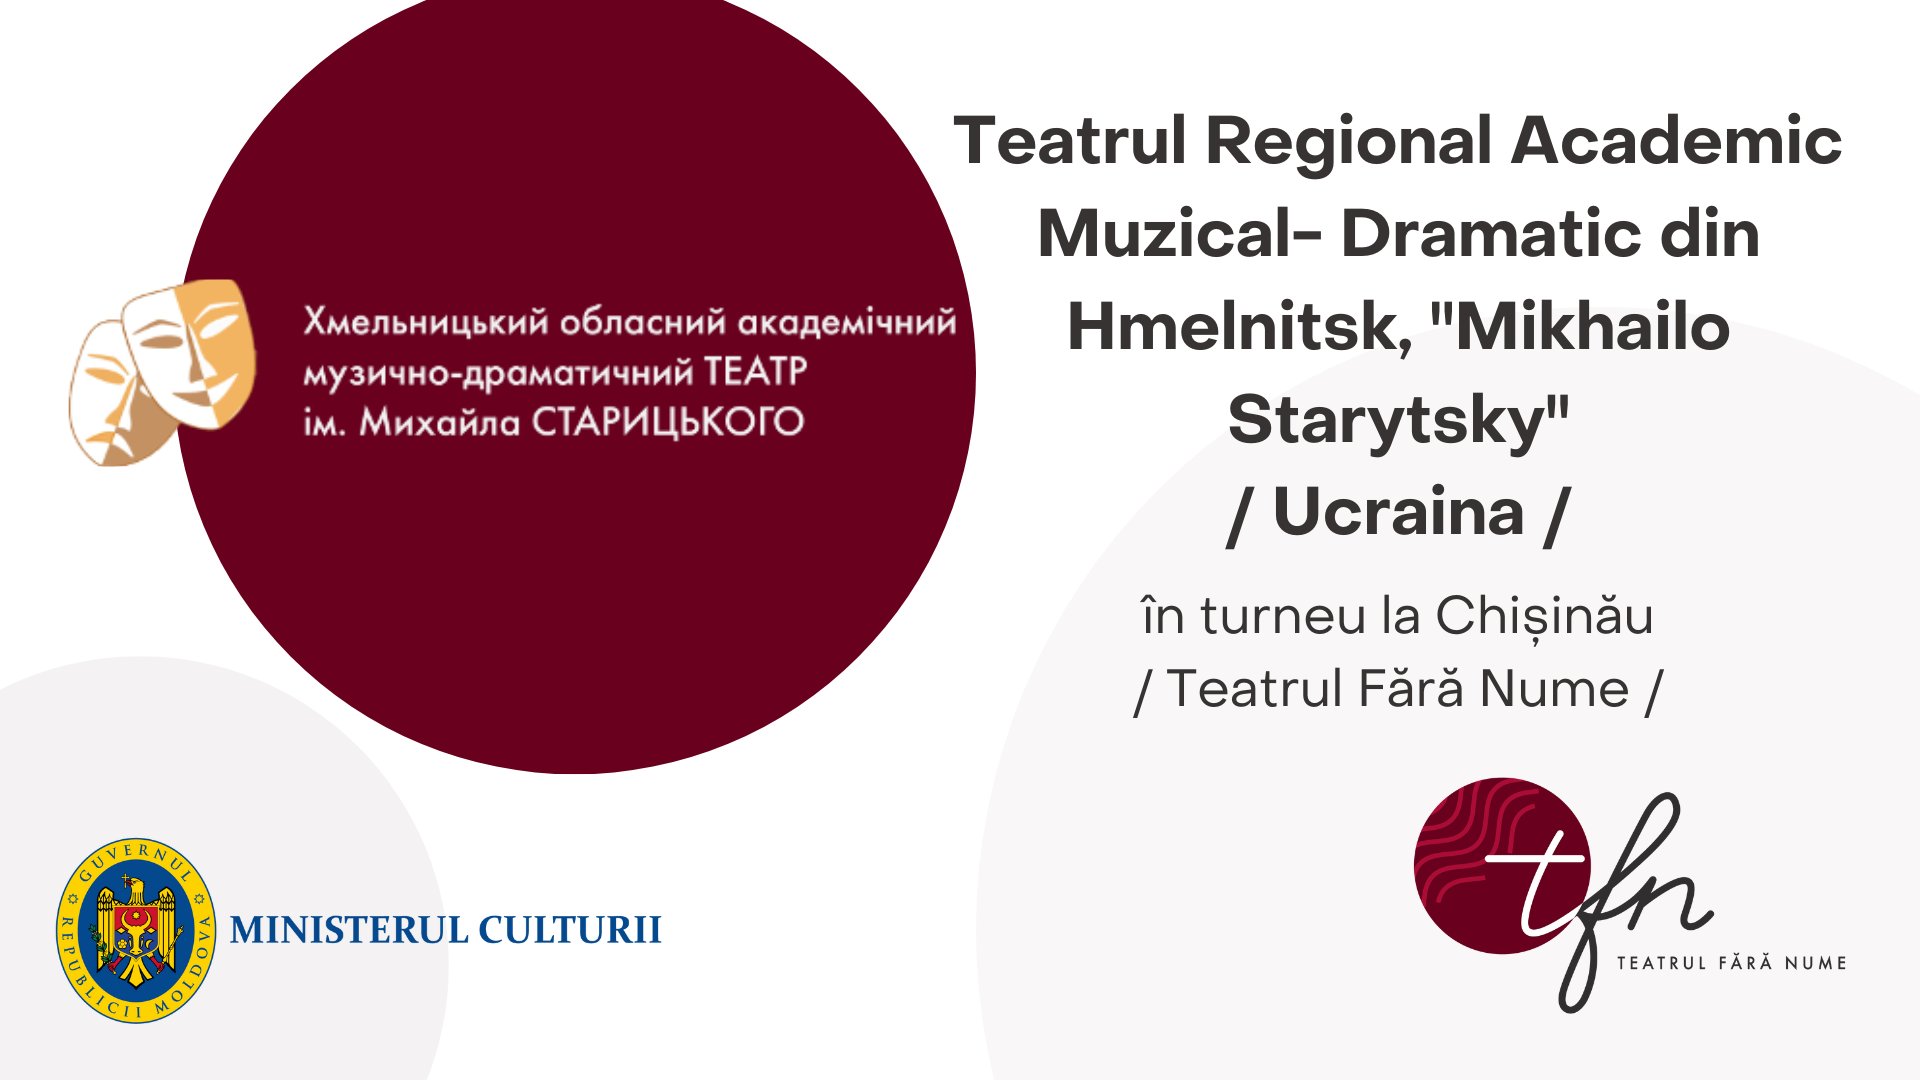 Teatrul Regional Academic Muzical- Dramatic din Hmelnitsk, "Mikhailo Starytsky" / Cartea Junglei